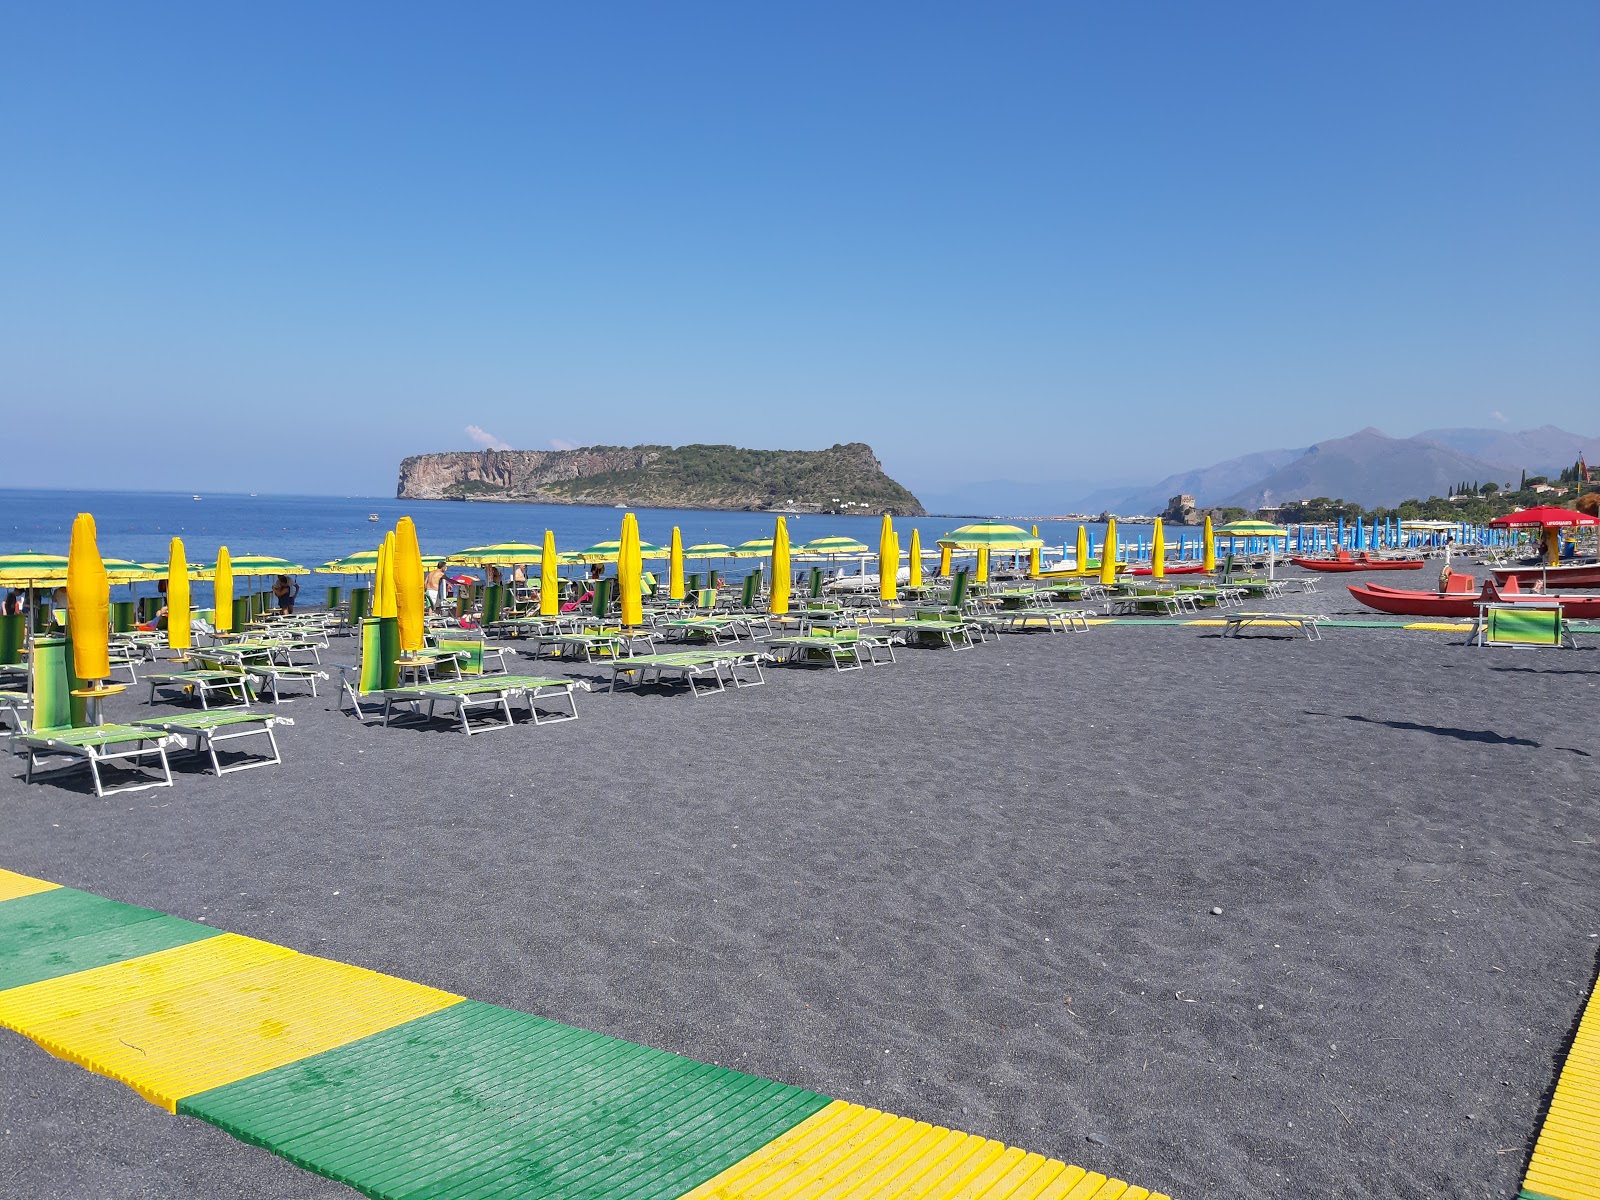 Foto de Spiaggia Fiuzzi área de resort de praia